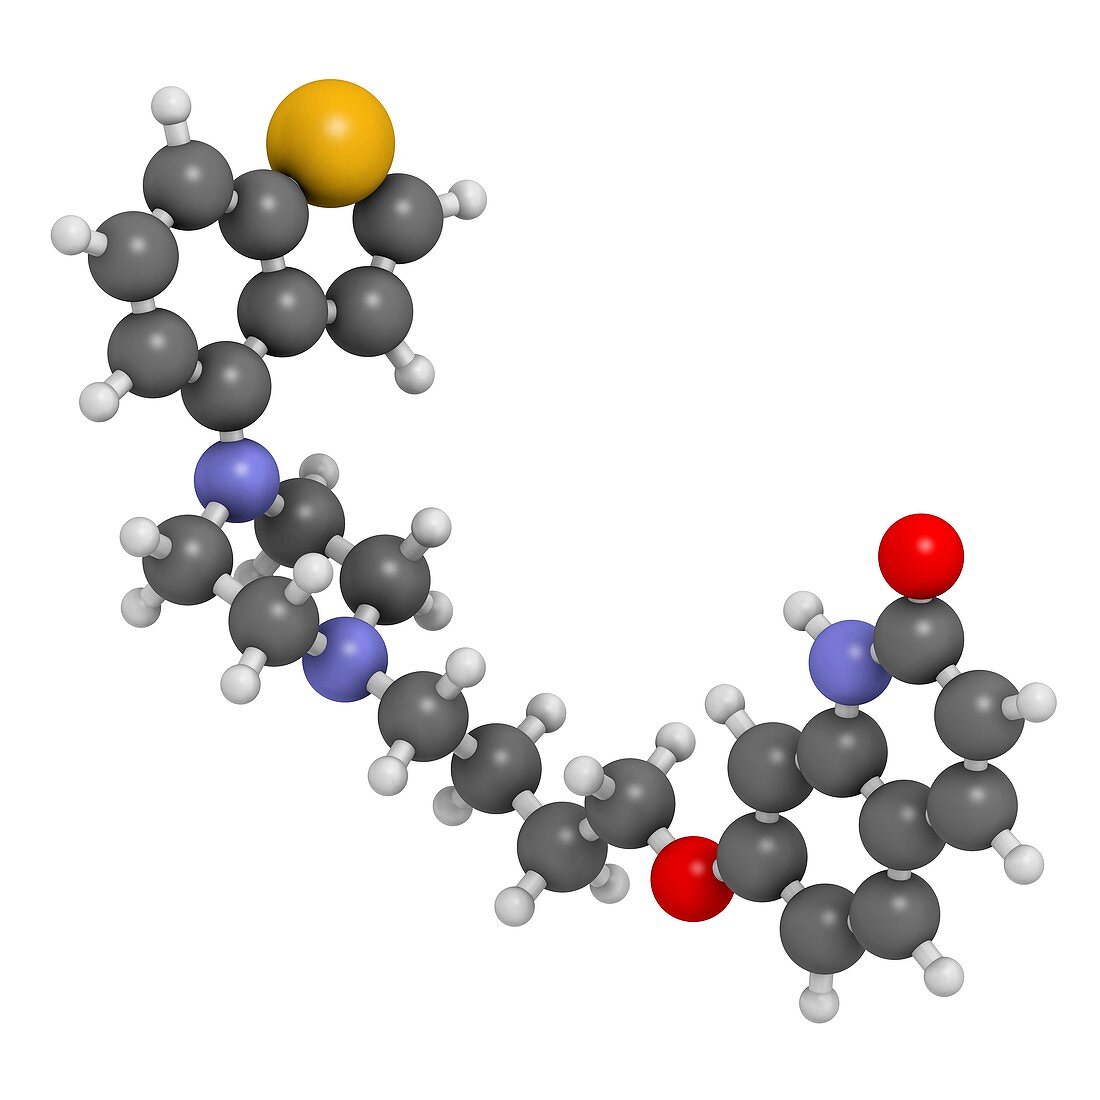 Brexpiprazole antipsychotic drug molecule